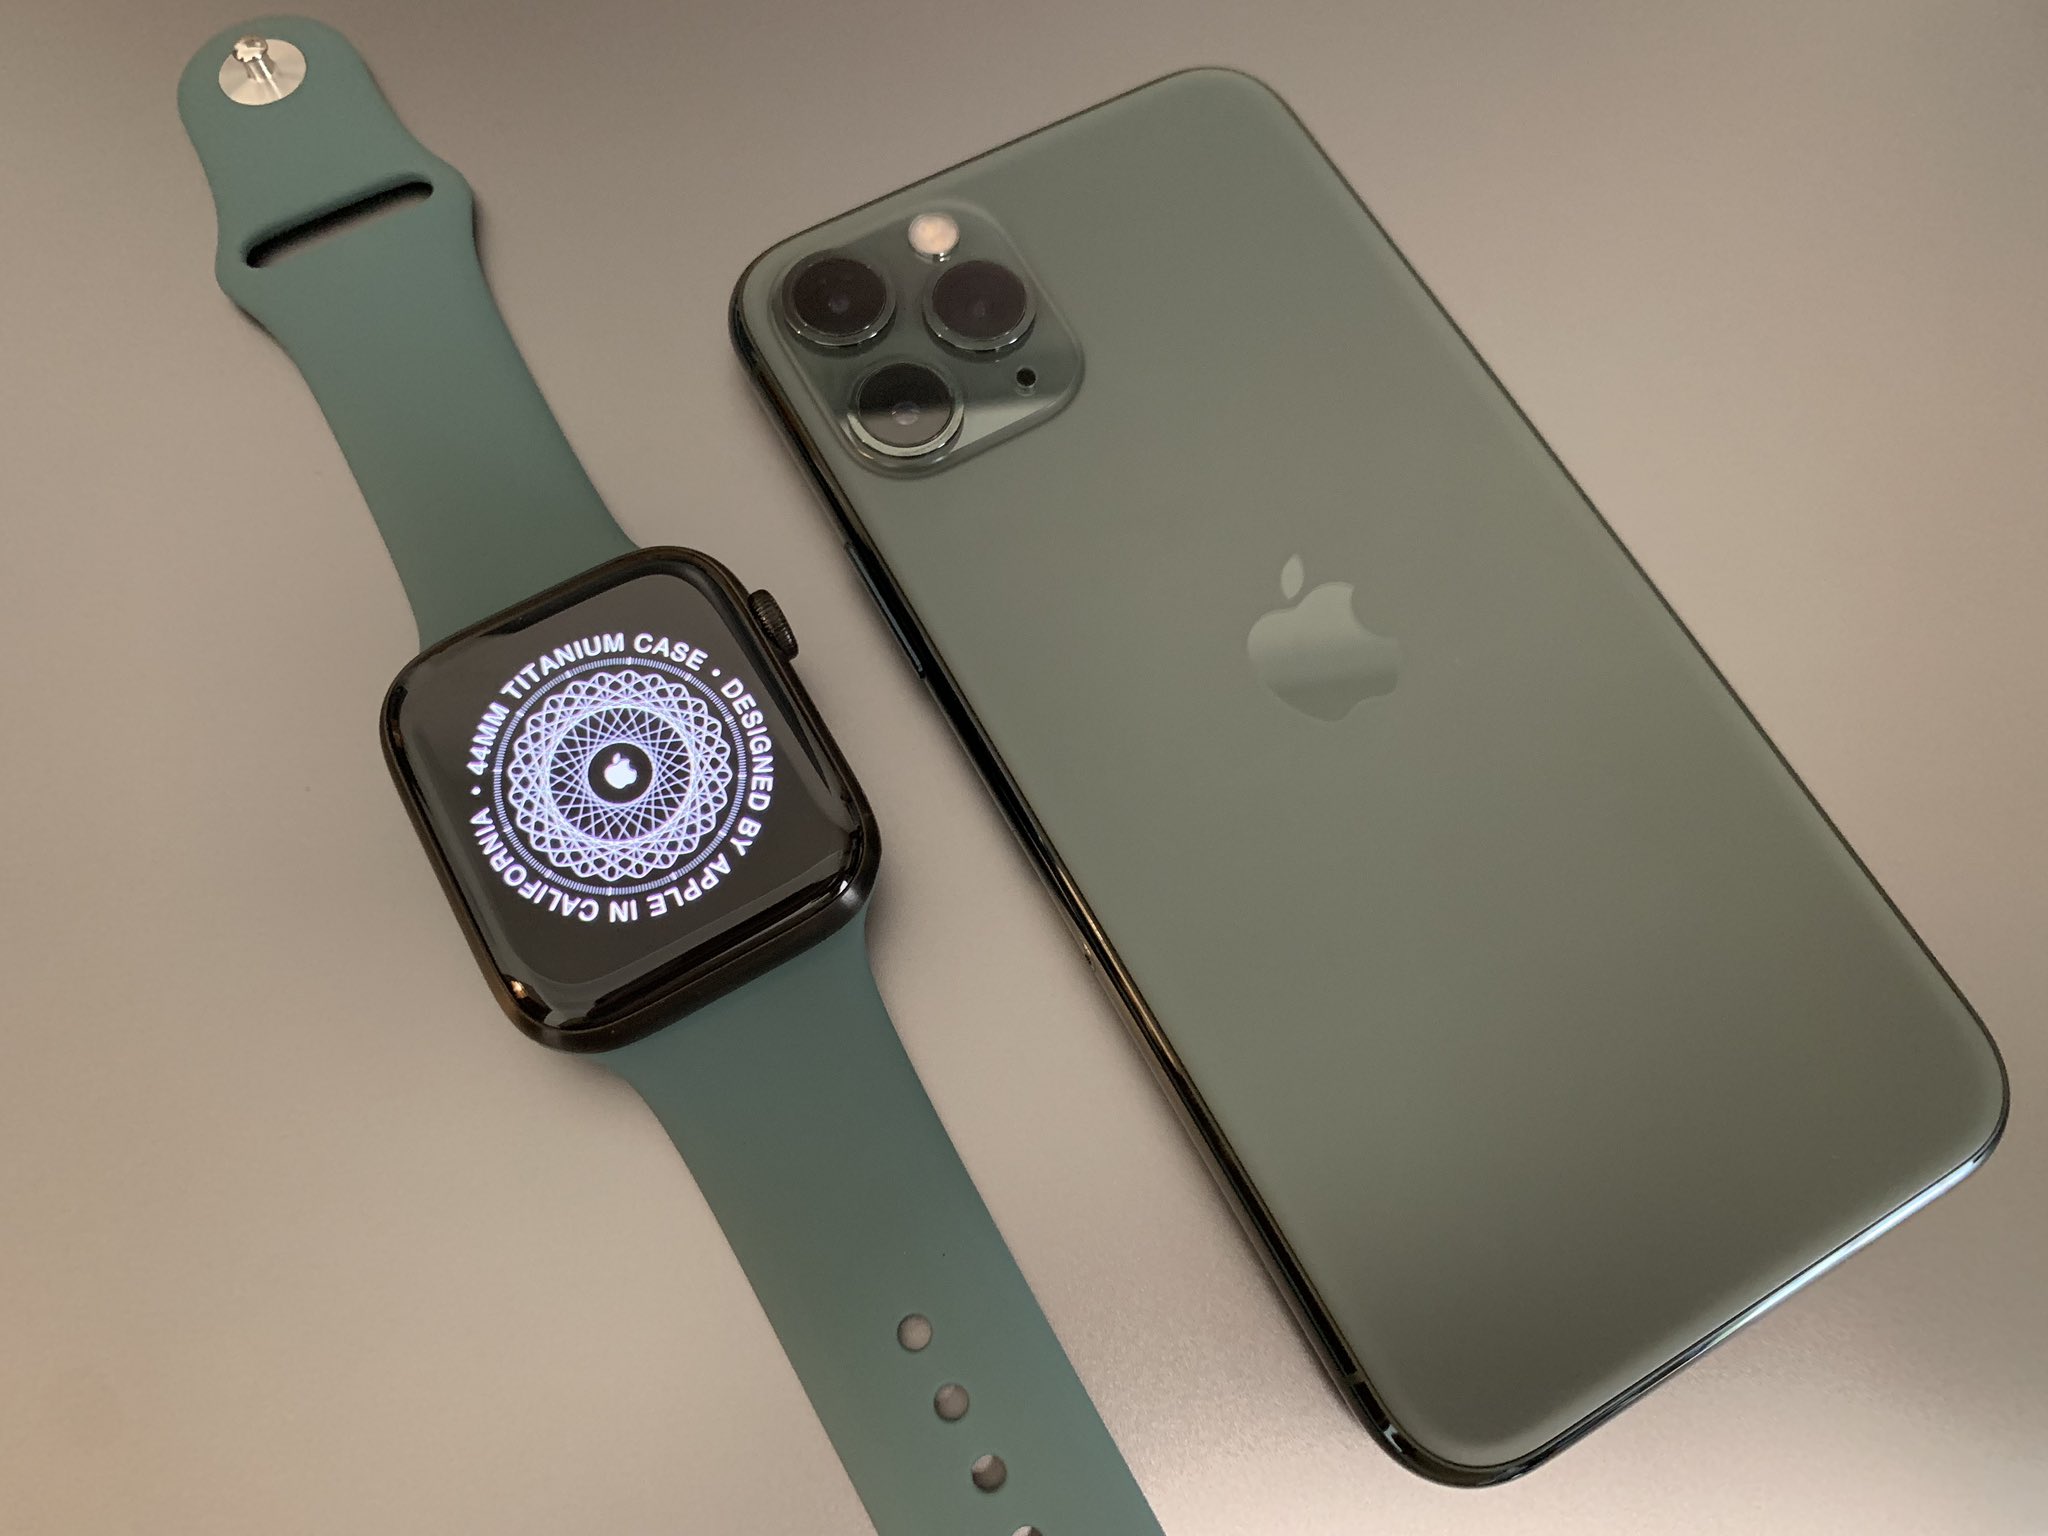 Ruim keuken Pacifische eilanden Daiki Shimizu on Twitter: "・iPhone 11 Pro ミッドナイトグリーン ・Apple Watch Series 5  × パイングリーンスポーツバンド この組み合わせがいいので新しく買い替える人にはオススメ...!! https://t.co/tyFxctMGy2"  / Twitter